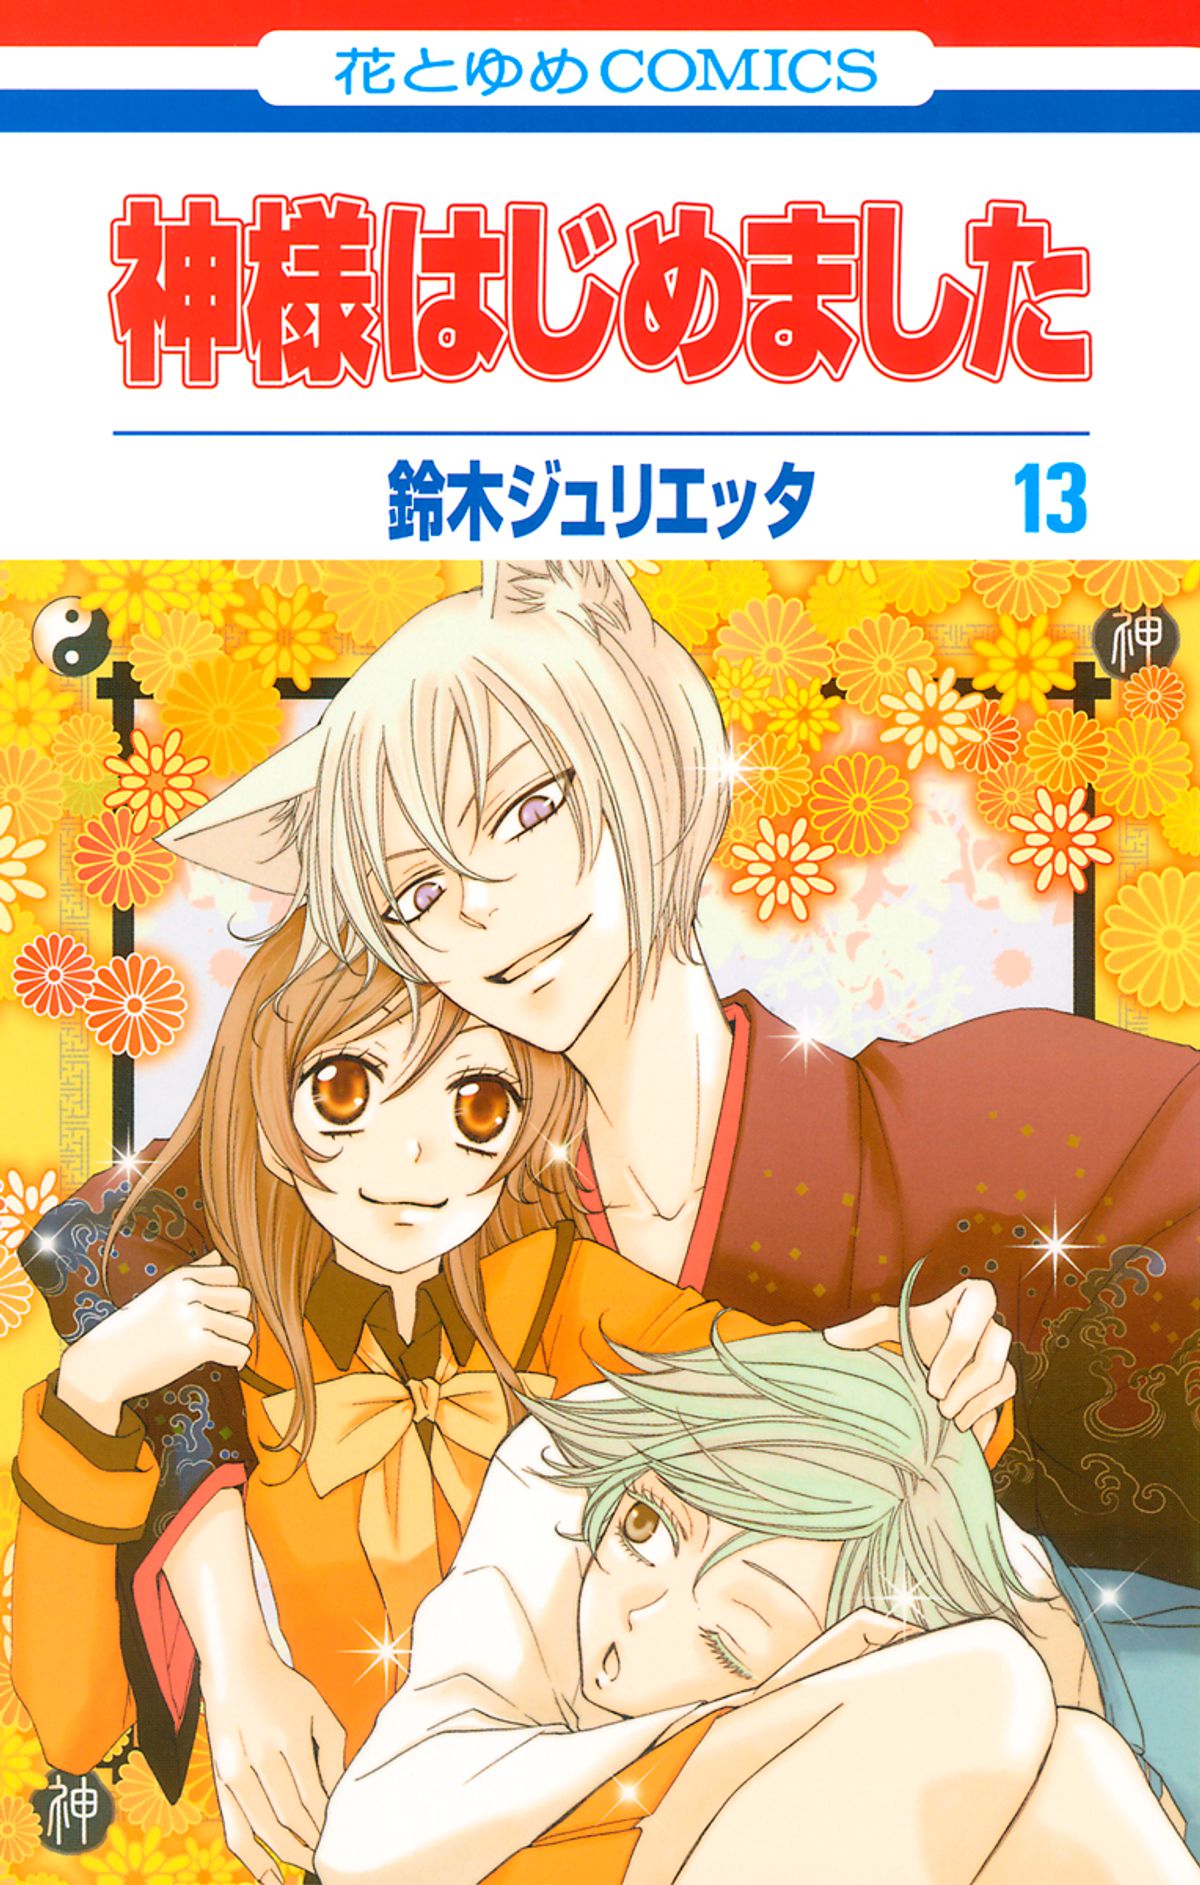 MyAnimeList on X: Shoujo manga Kamisama Hajimemashita, which ends today,  announces a new OVA episode    / X